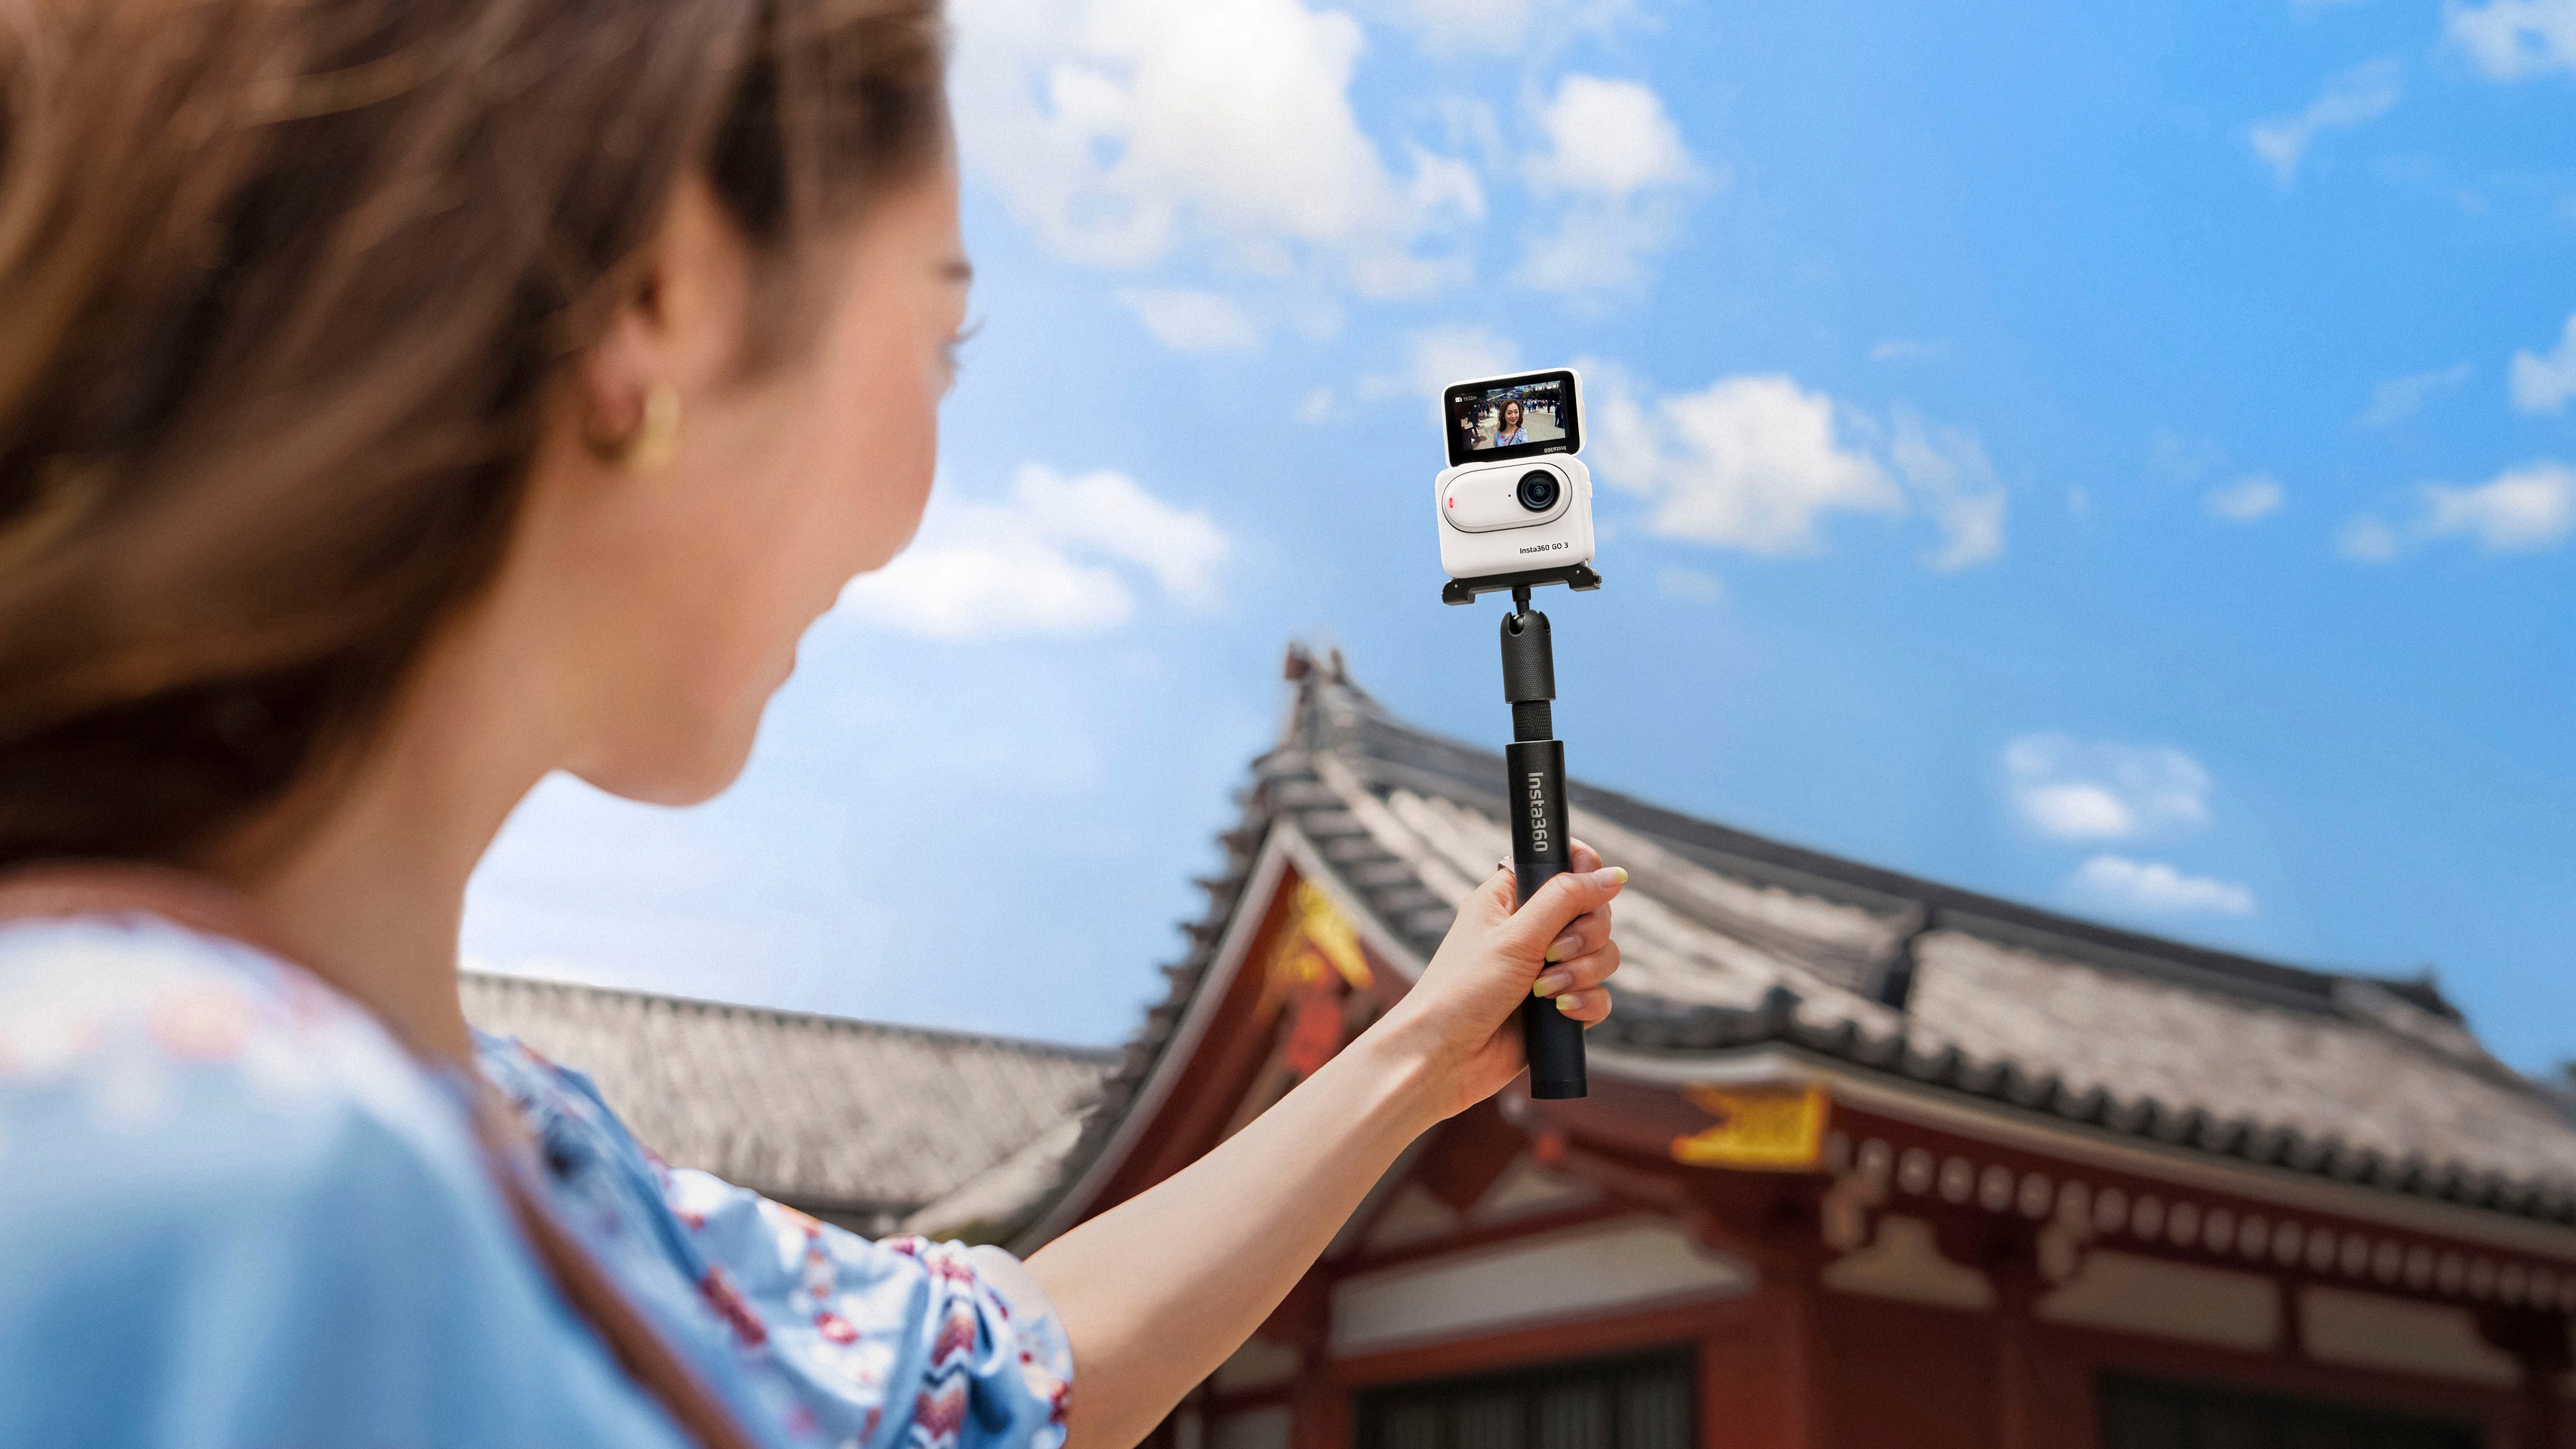 Insta360 GO 3 (64GB) Action Camera with Lens Guard White CINSABKA - Best Buy